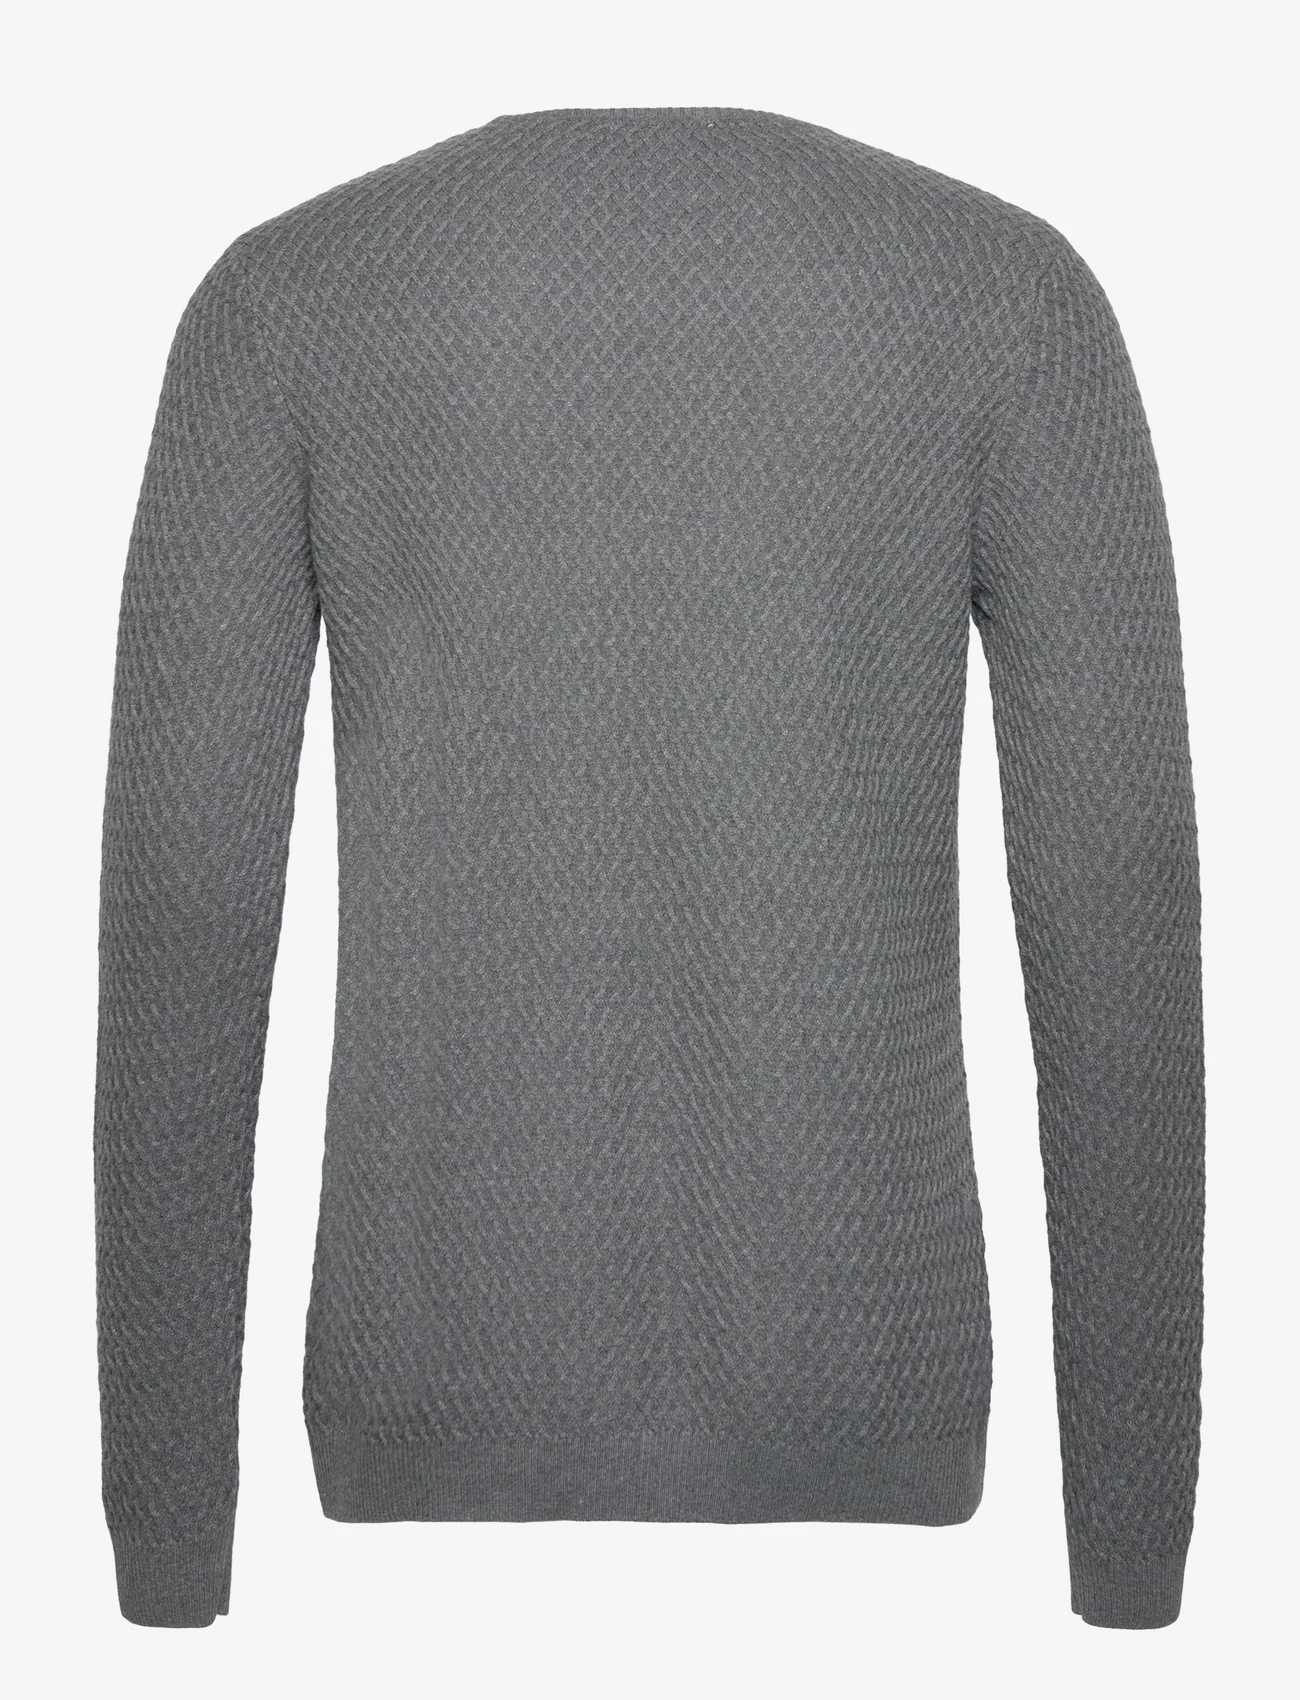 Knowledge Cotton Apparel - Small Diamond Knit - GOTS/Vegan - knitted round necks - dark grey melange - 1